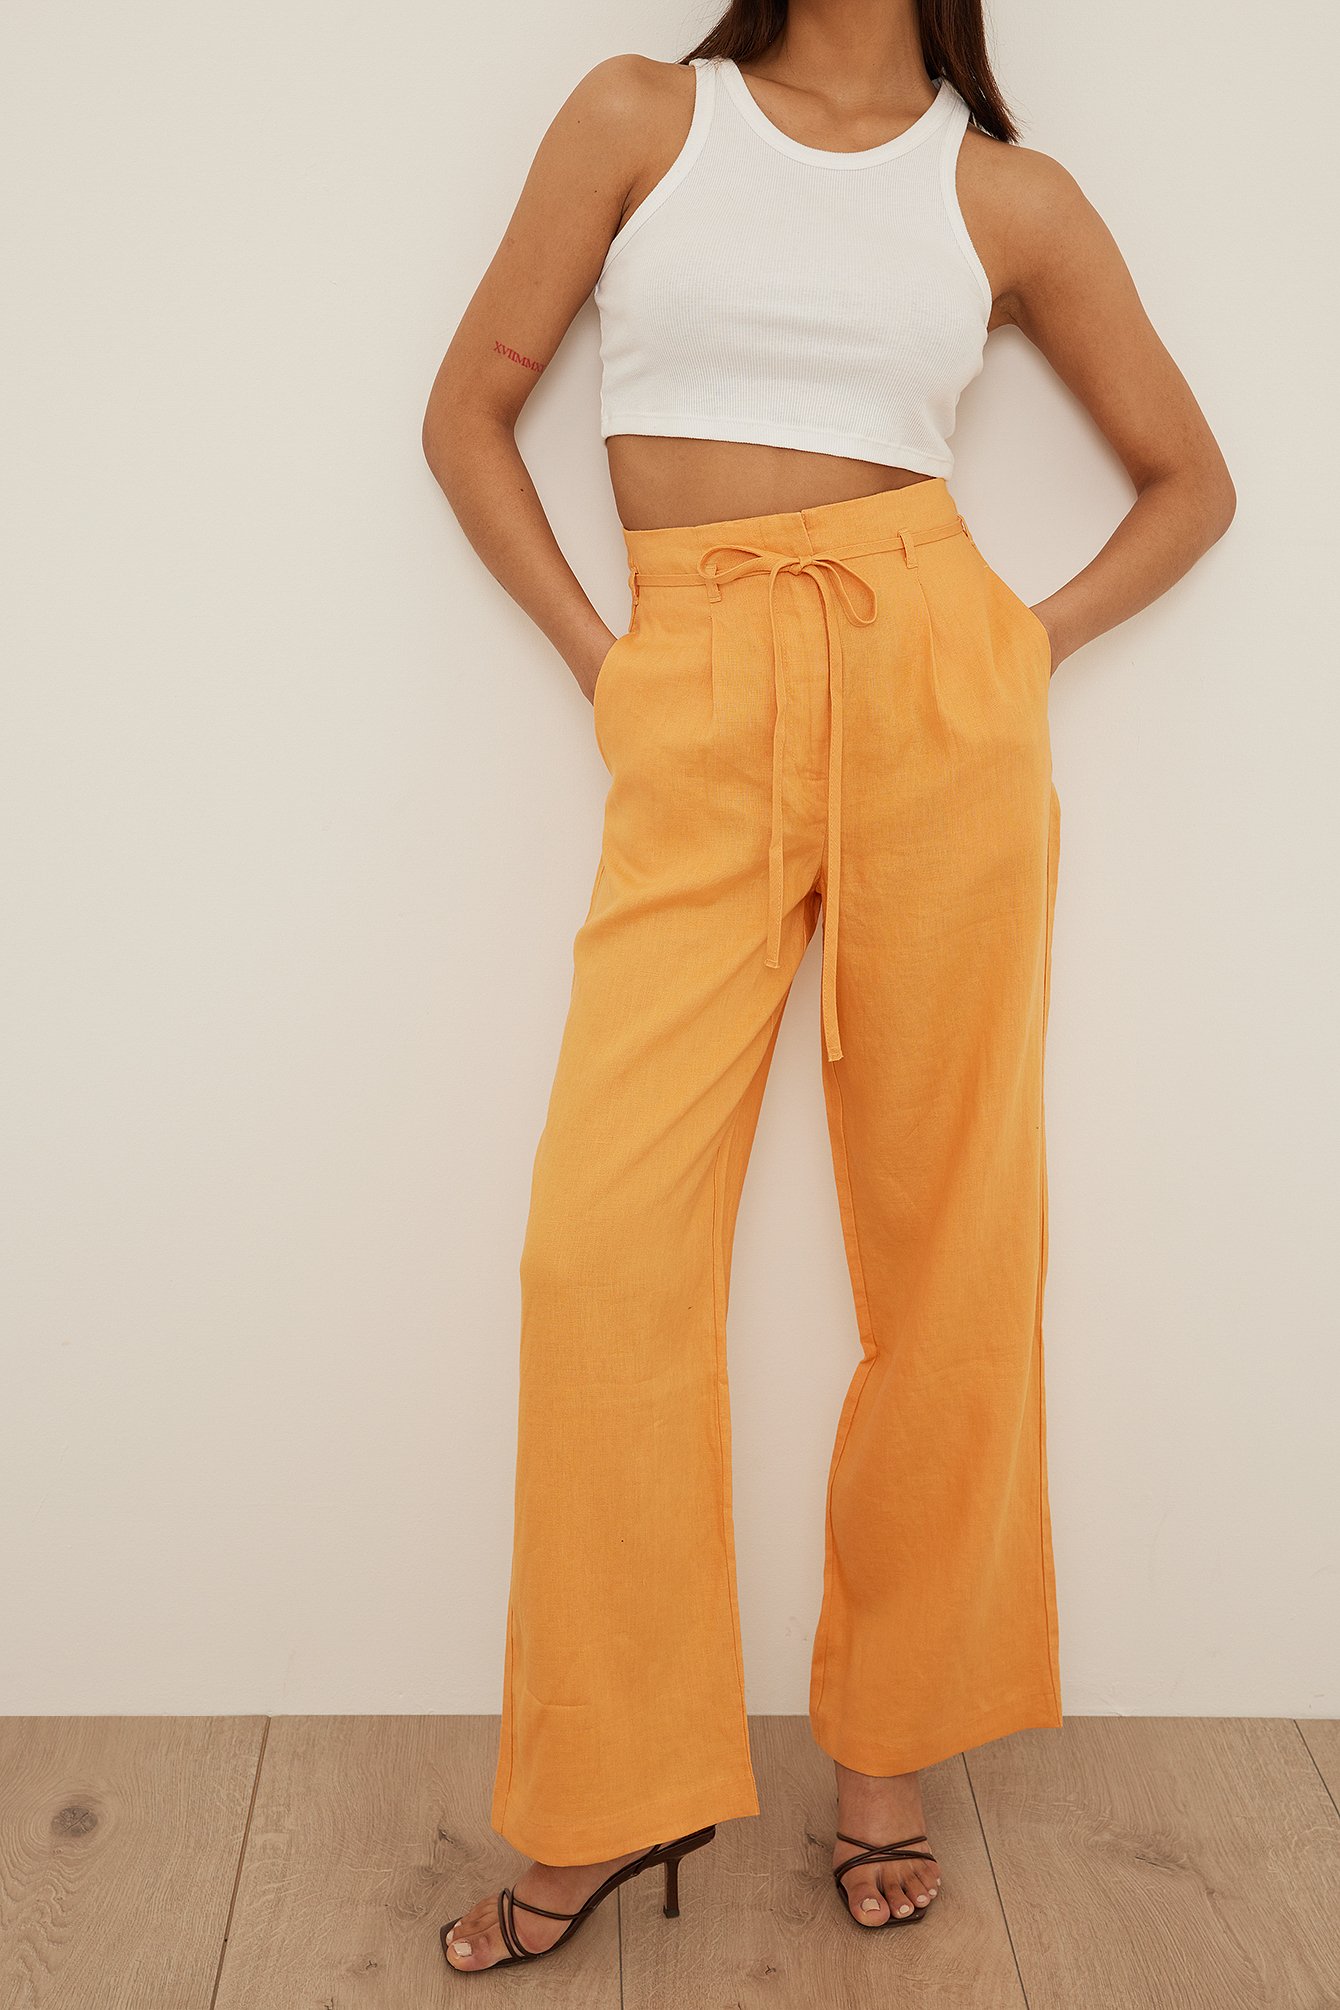 Orange Le Raphia 'Le Pantalon Banho' Trousers by JACQUEMUS on Sale